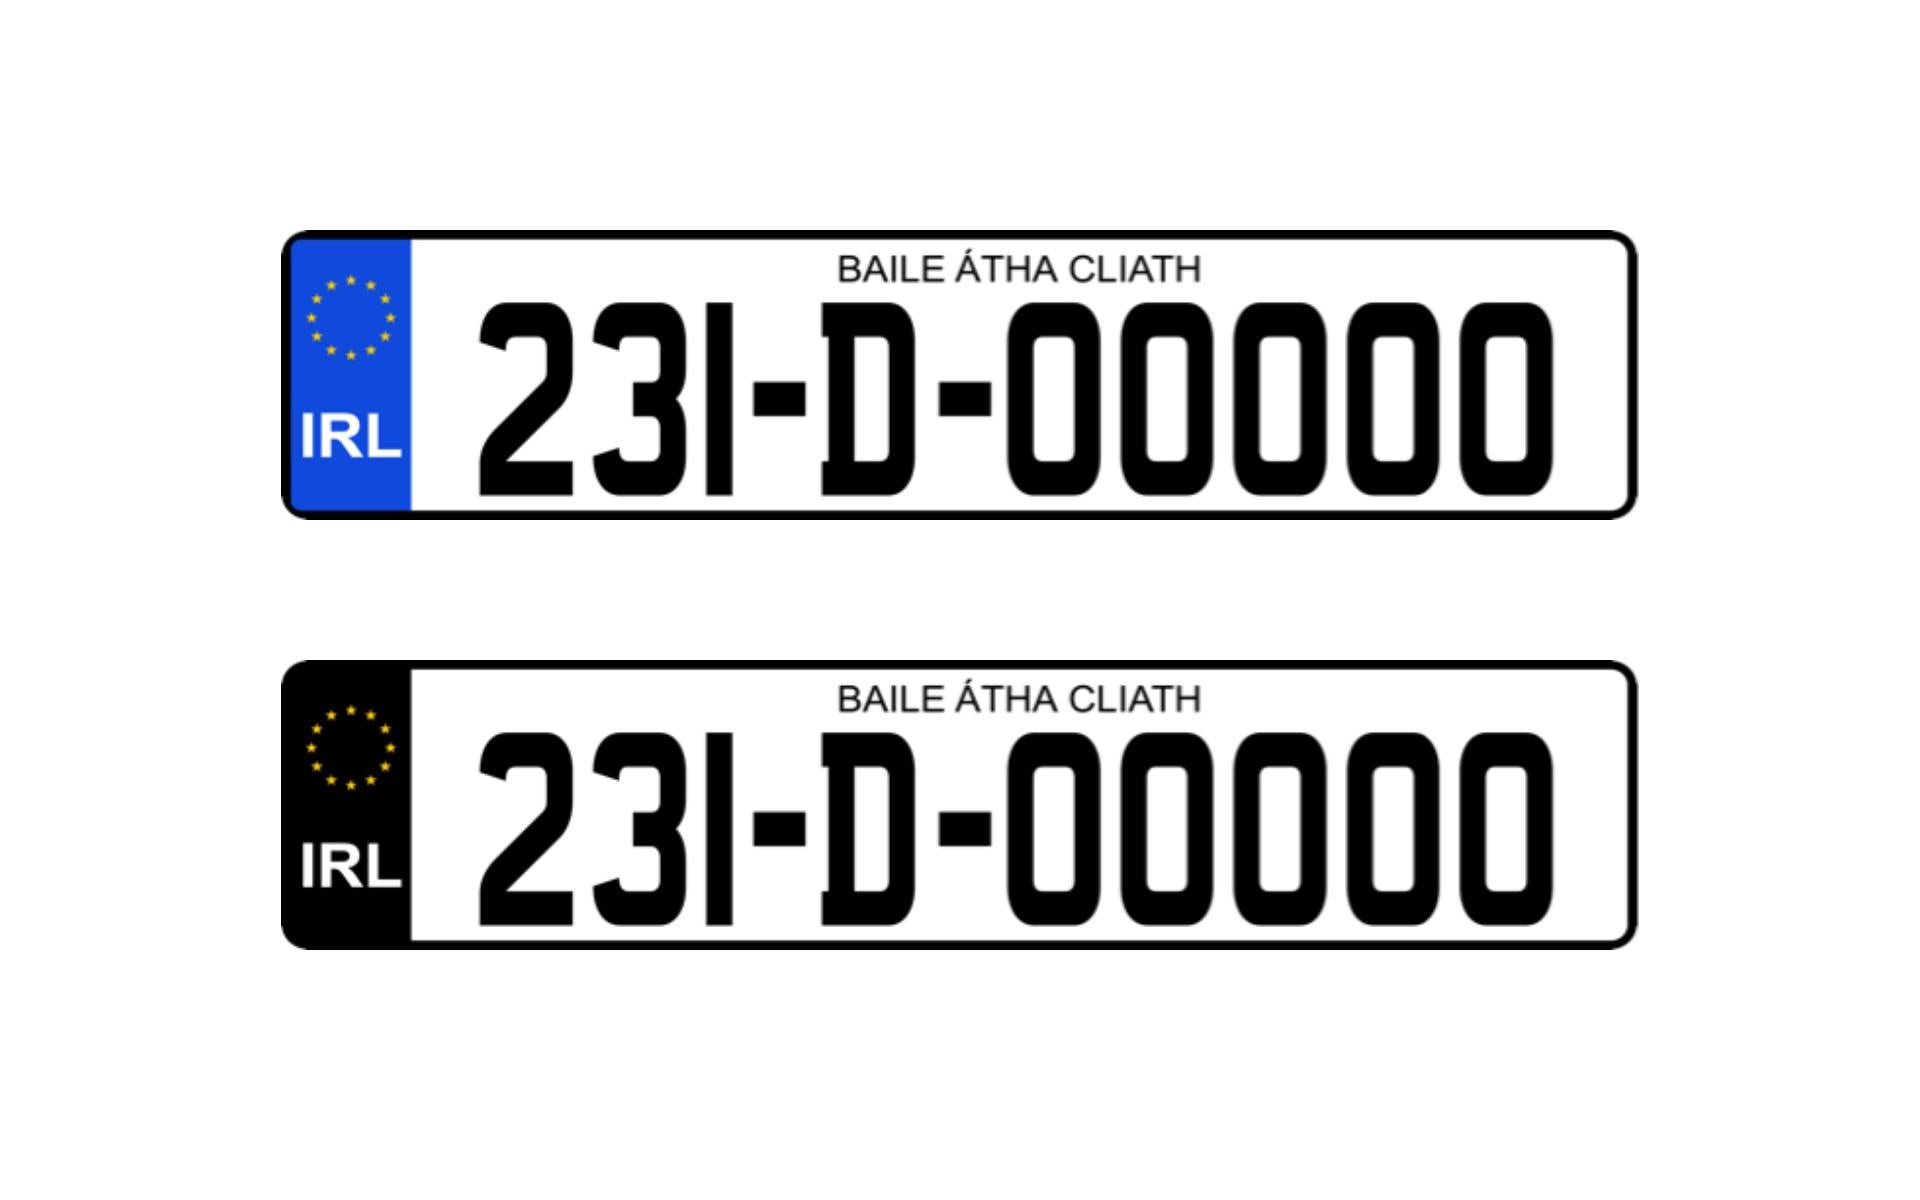 Tinted 2D Standard Font Number Plates